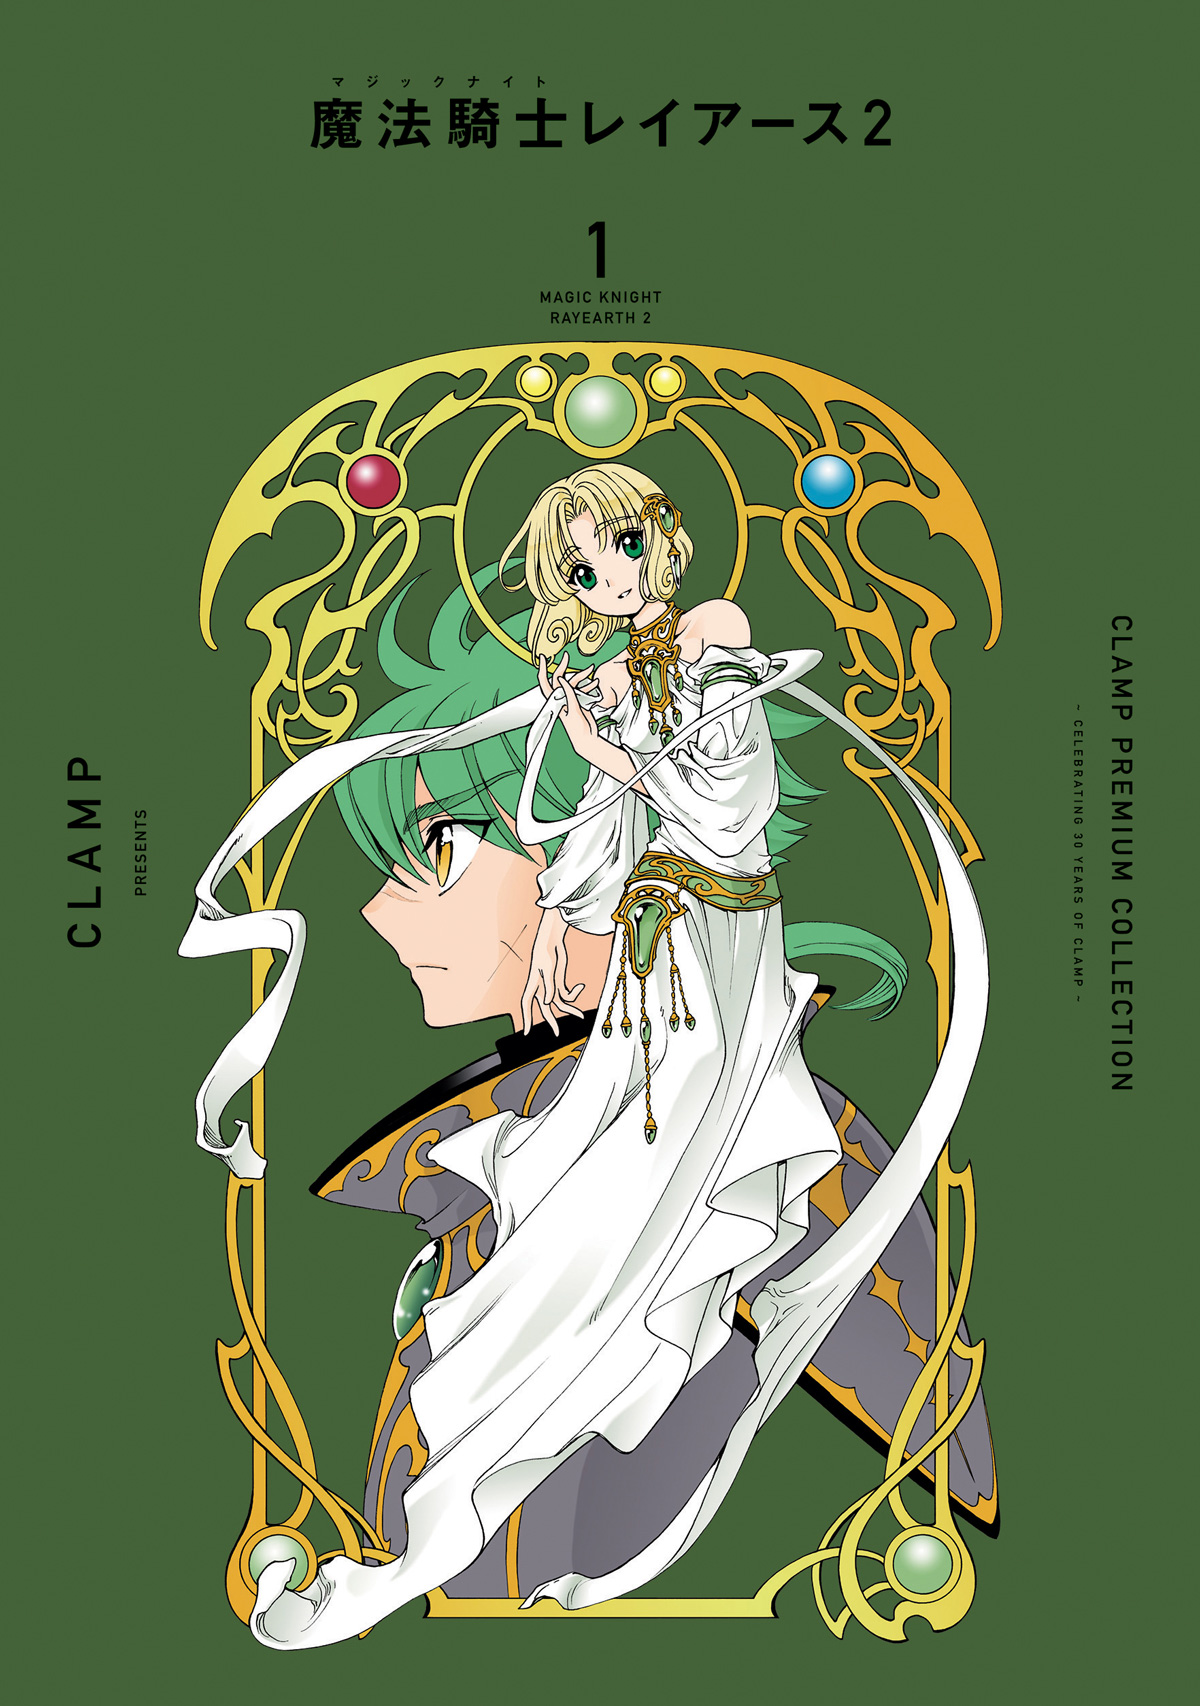 CLAMP PREMIUM COLLECTION「魔法騎士レイアース２」1巻 12/13発売 